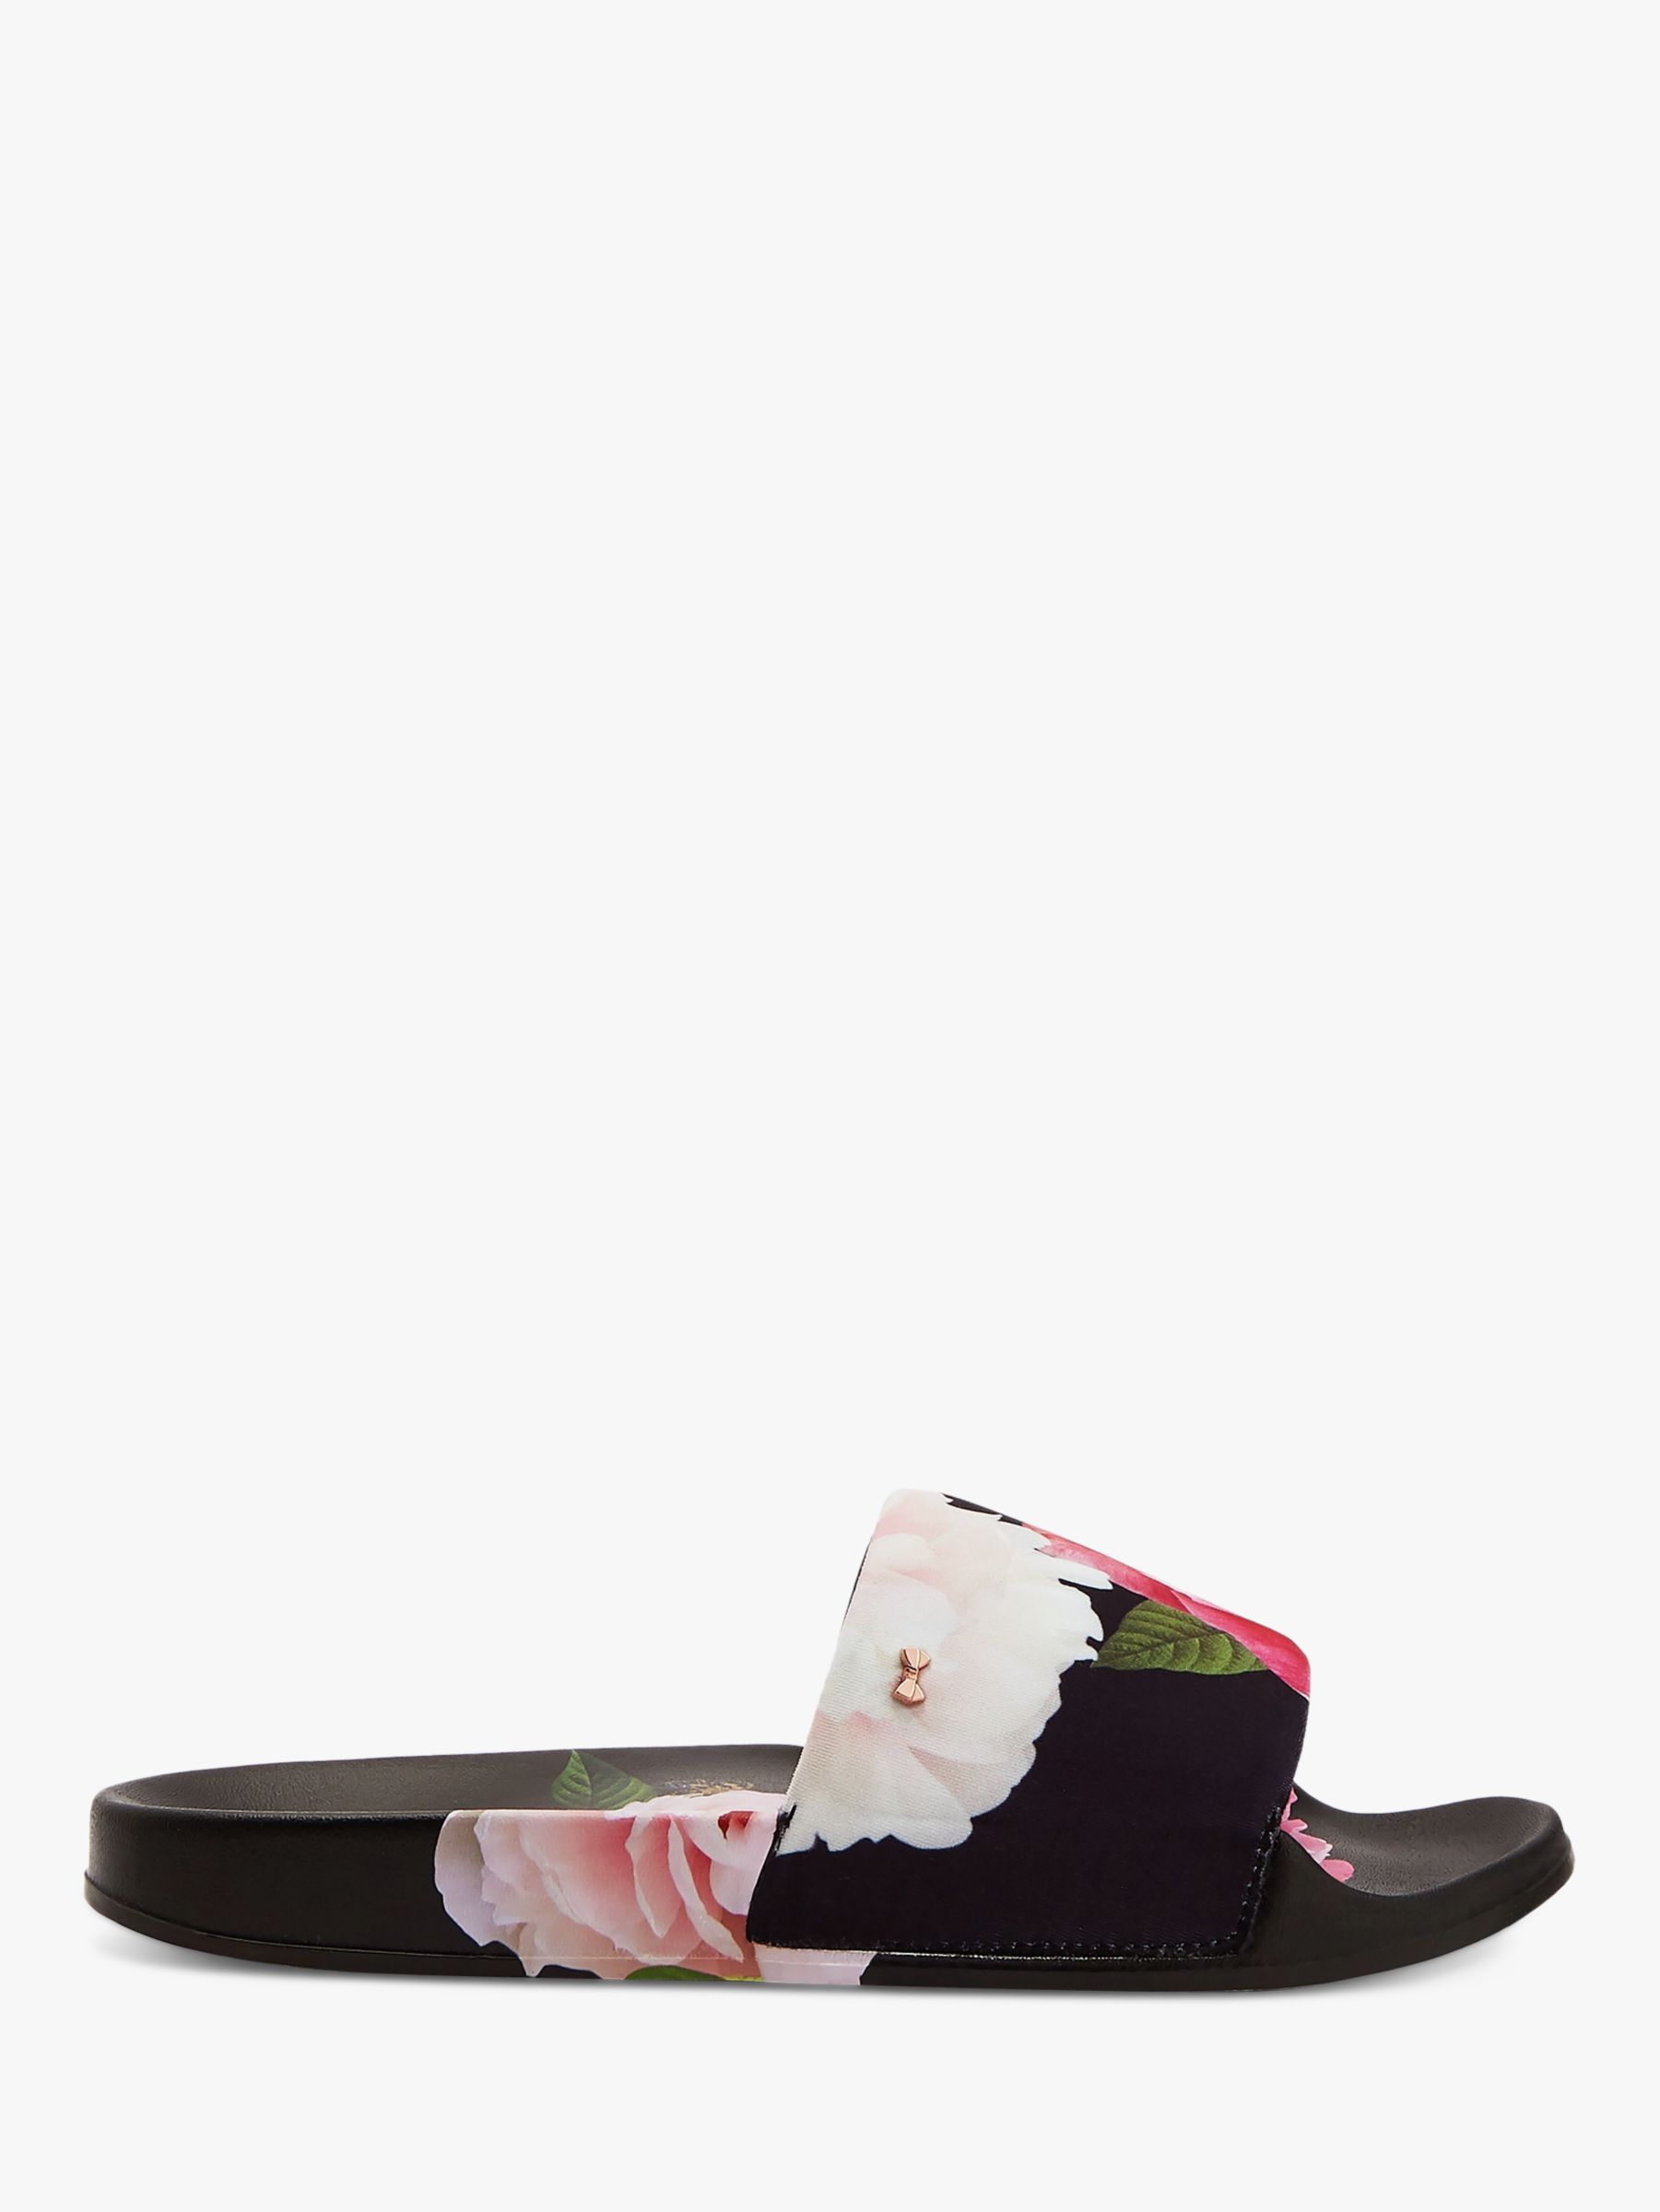 Ted Baker Avelini Floral Print Slider Sandals, Black/Multi, 3